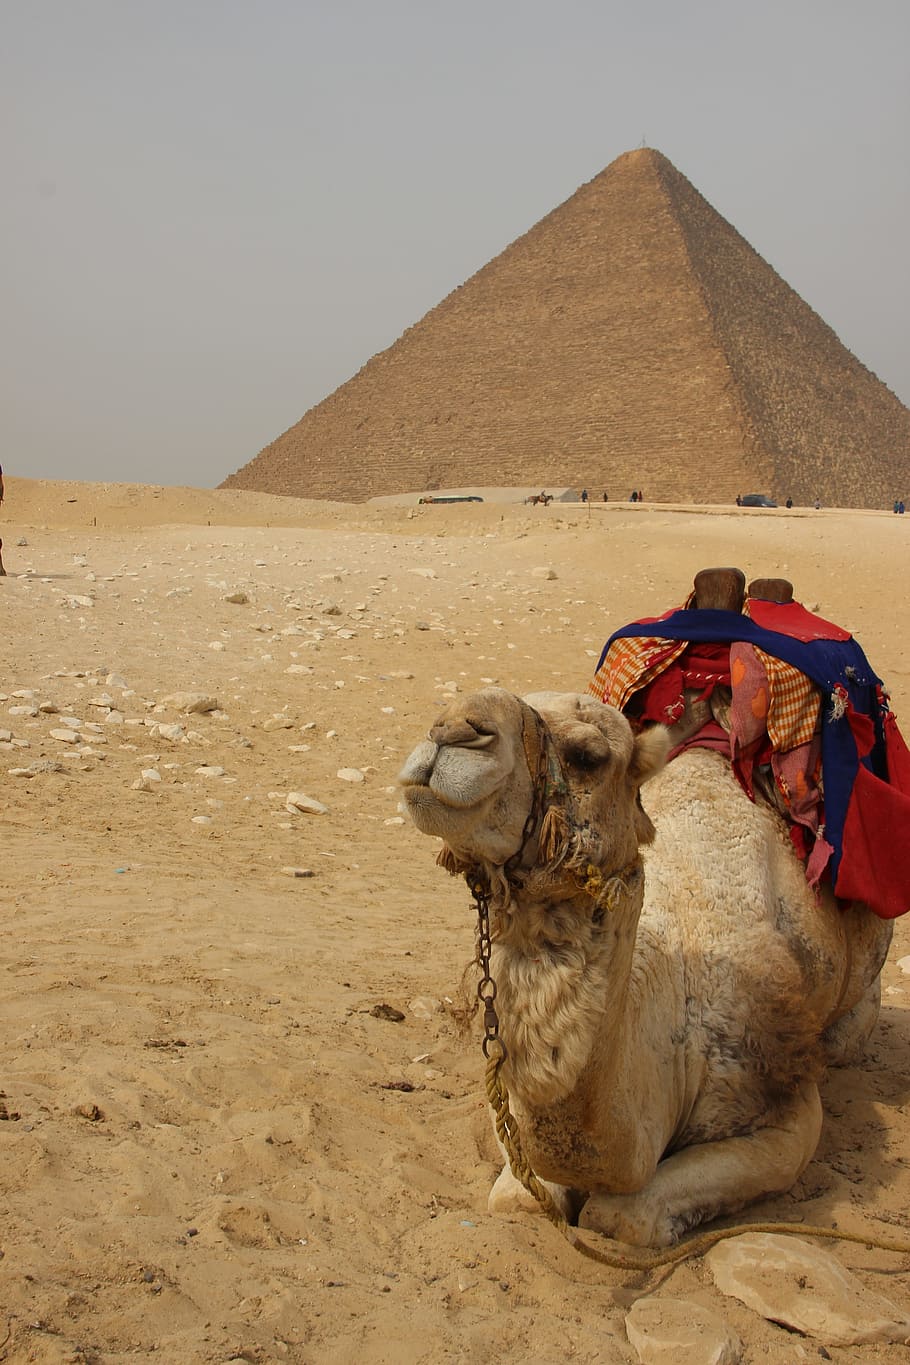 marrón, camello, mentira, arena, Egipto, África, pirámide, viaje, desierto, desierto del sahara